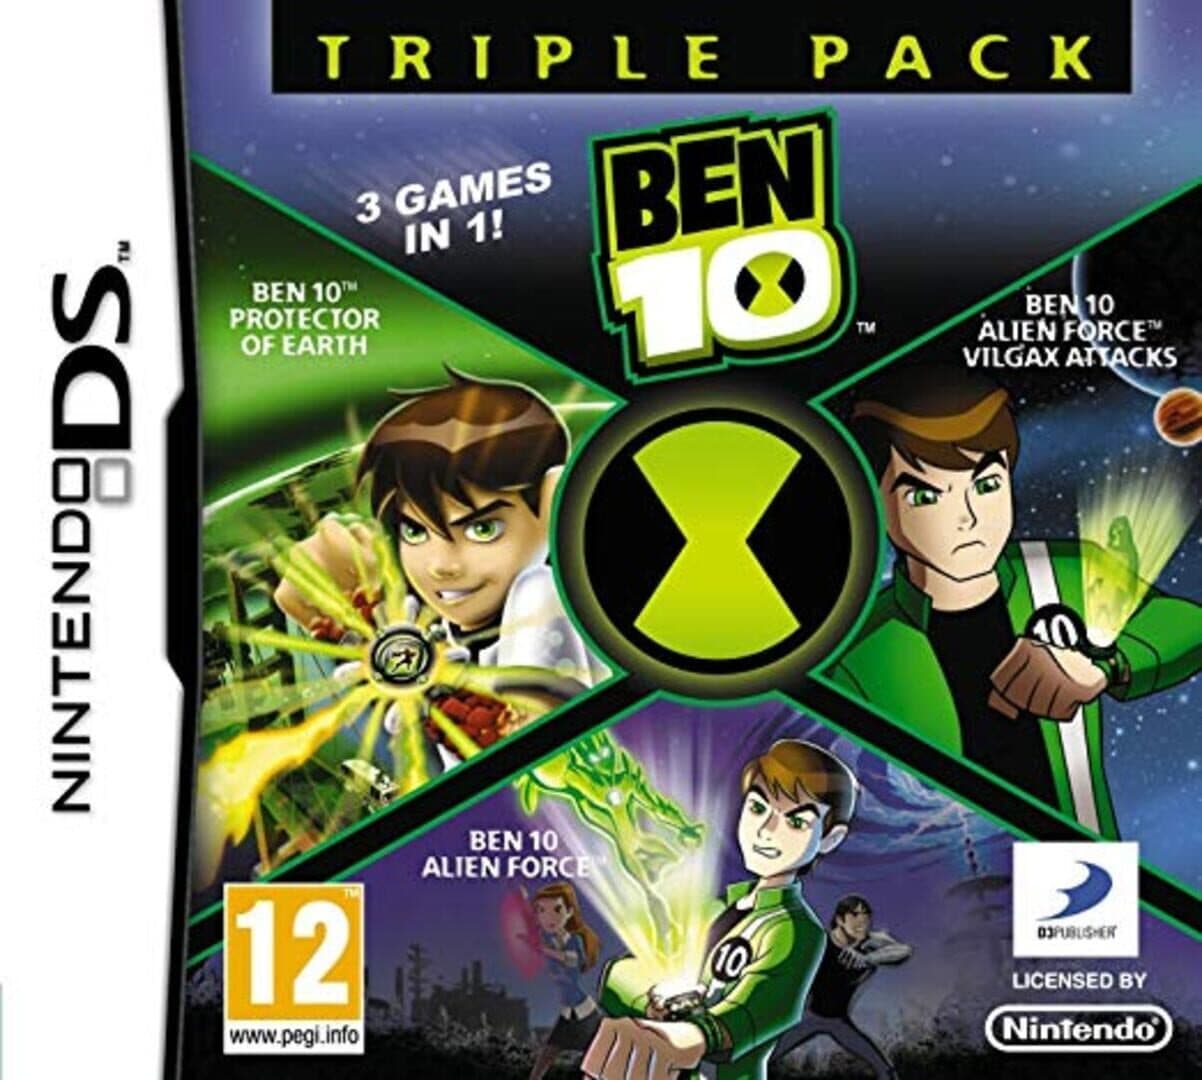 Ben 10 Triple Pack cover art